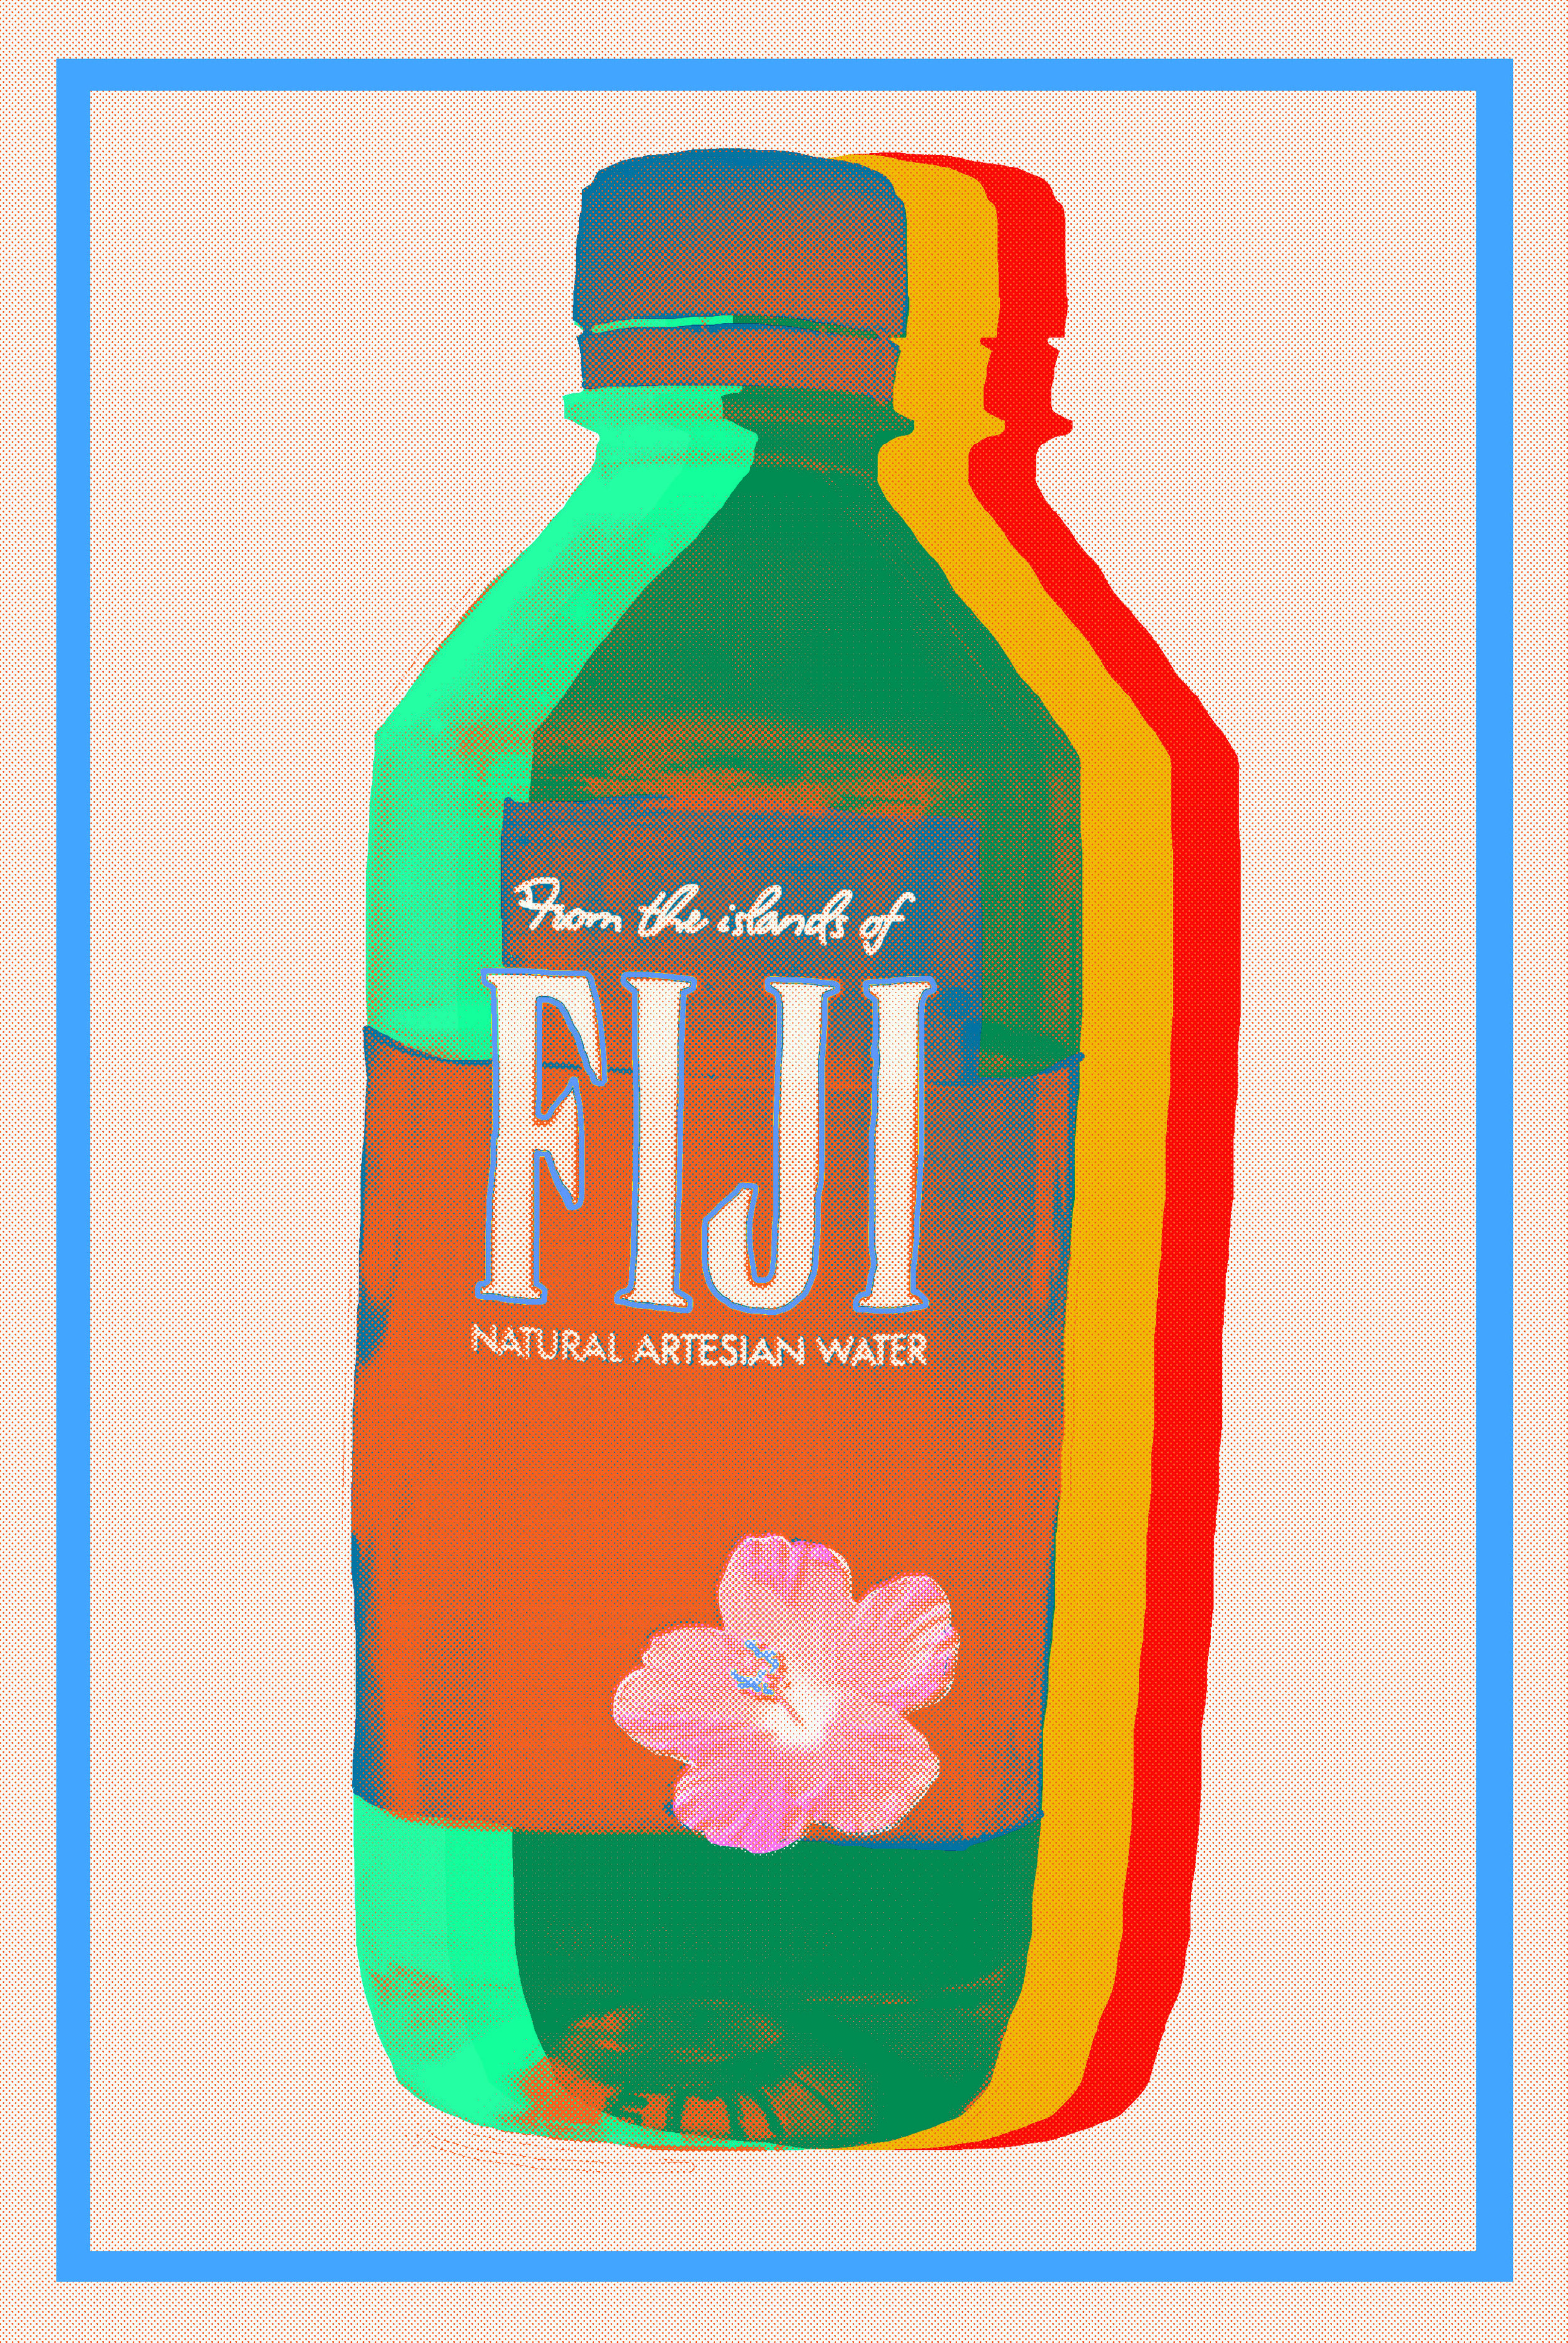  Fiji White  Giclee Print  11” x 8.5”  15 edition + 2 AP  2018 